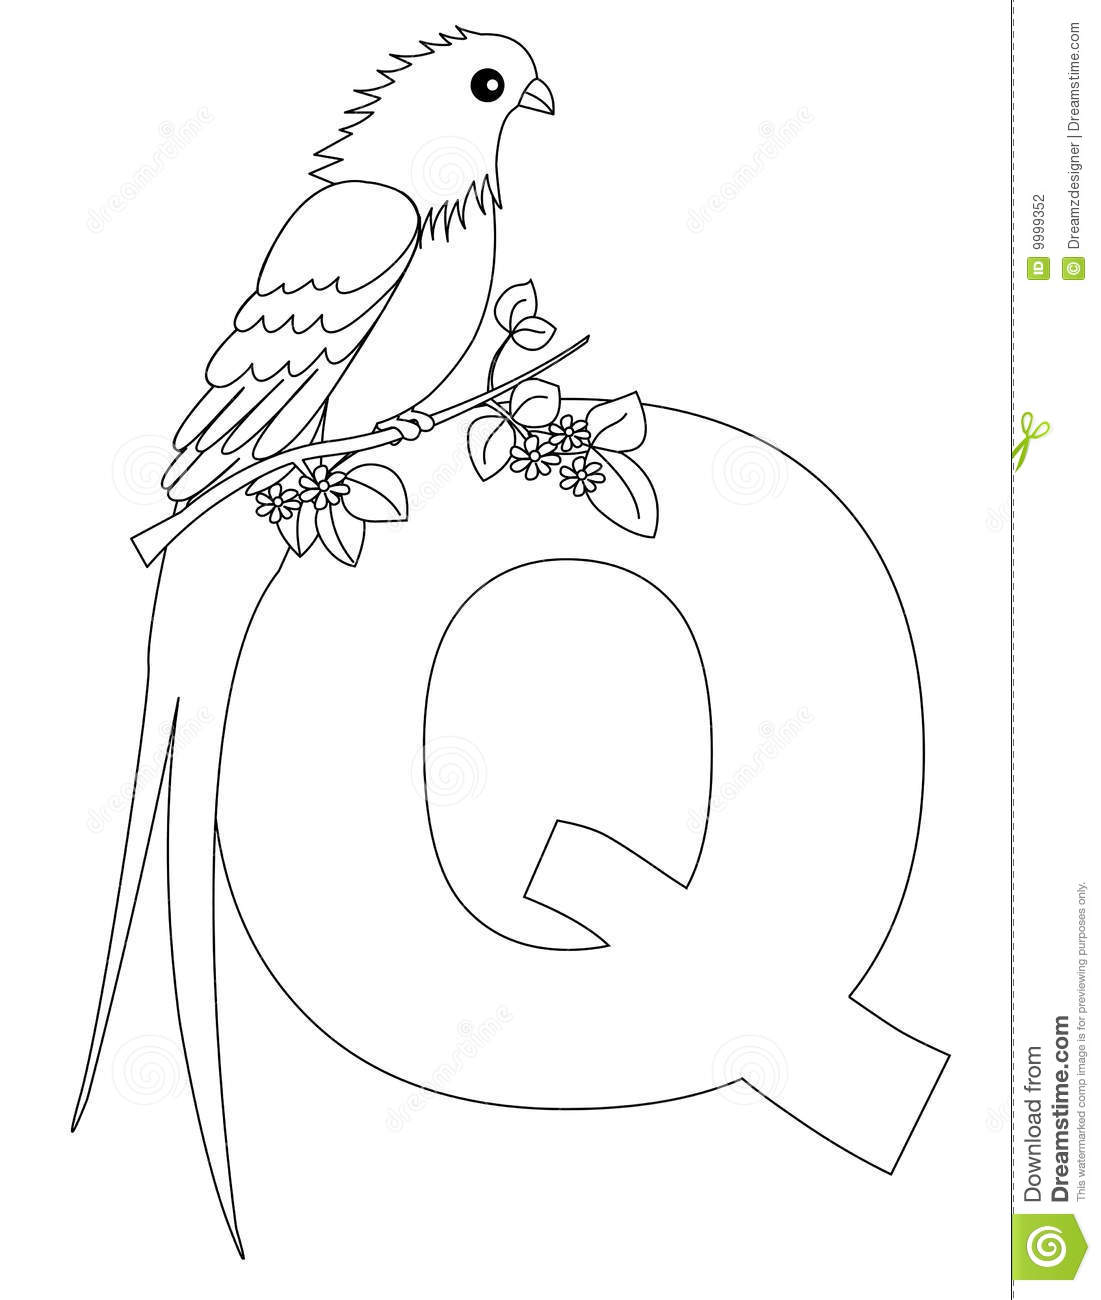 The Quetzal Of Guatamala coloring #11, Download drawings